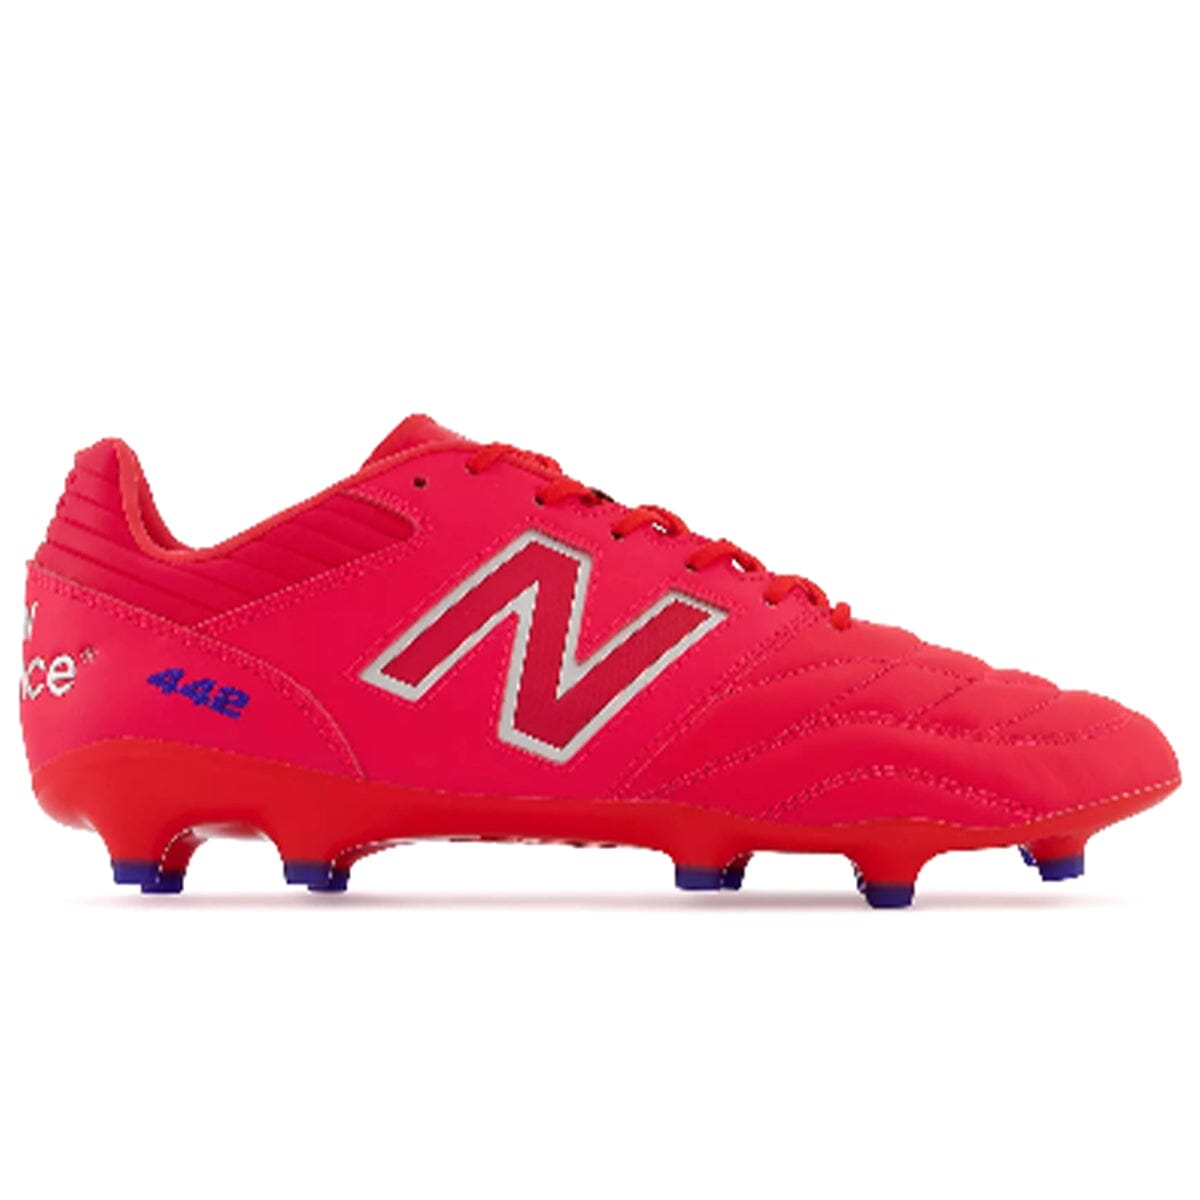 New Balance Unisex 442 V2 Pro FG Soccer Shoes | MS41FRR2 Soccer Shoes New Balance 7.5 2E Wide Red 